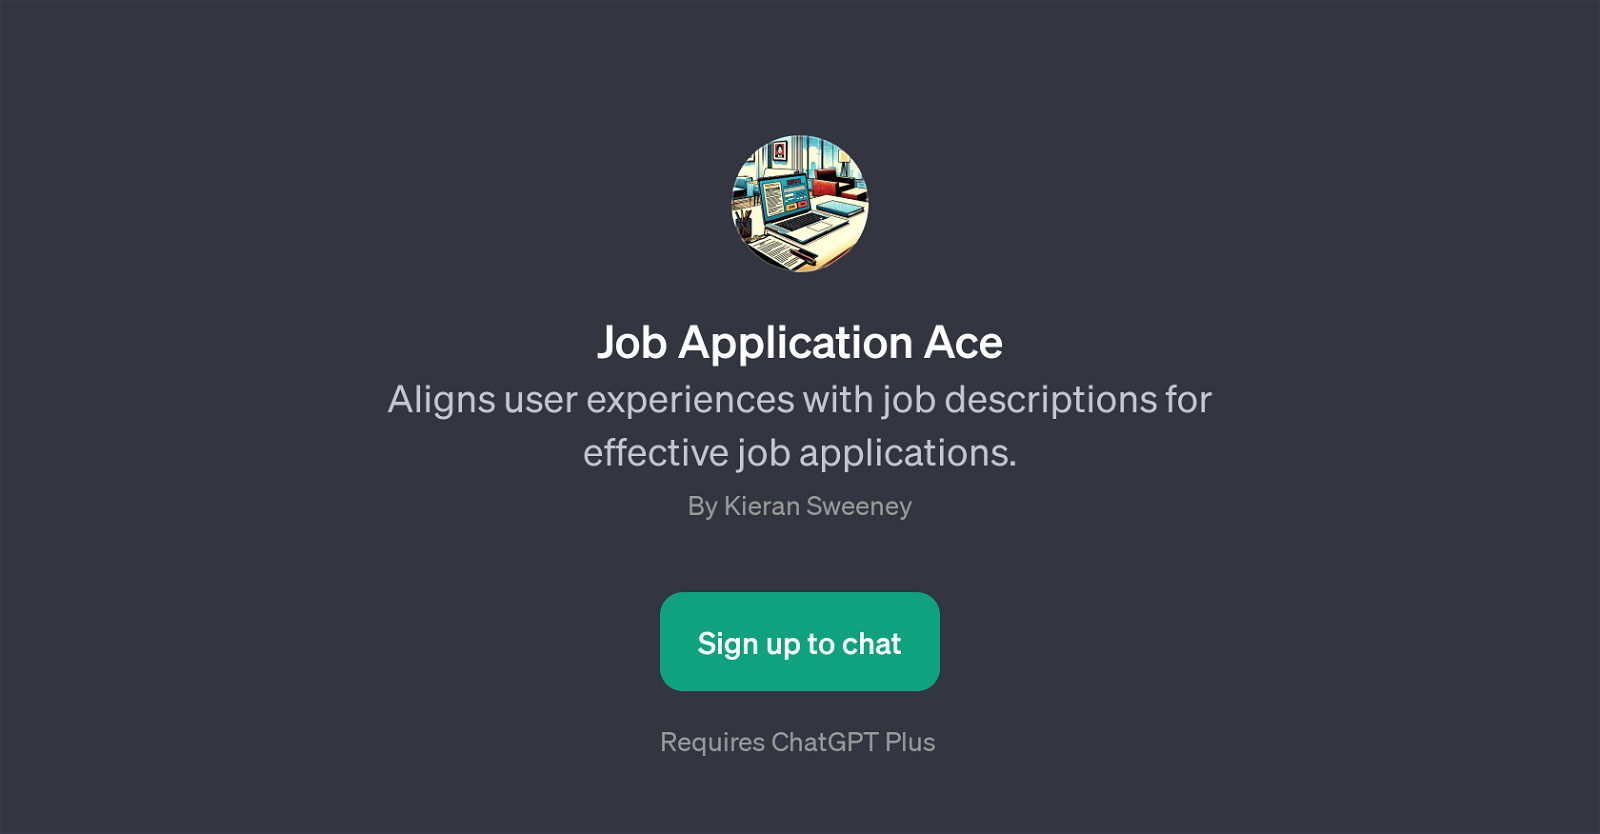 Job Application Ace website